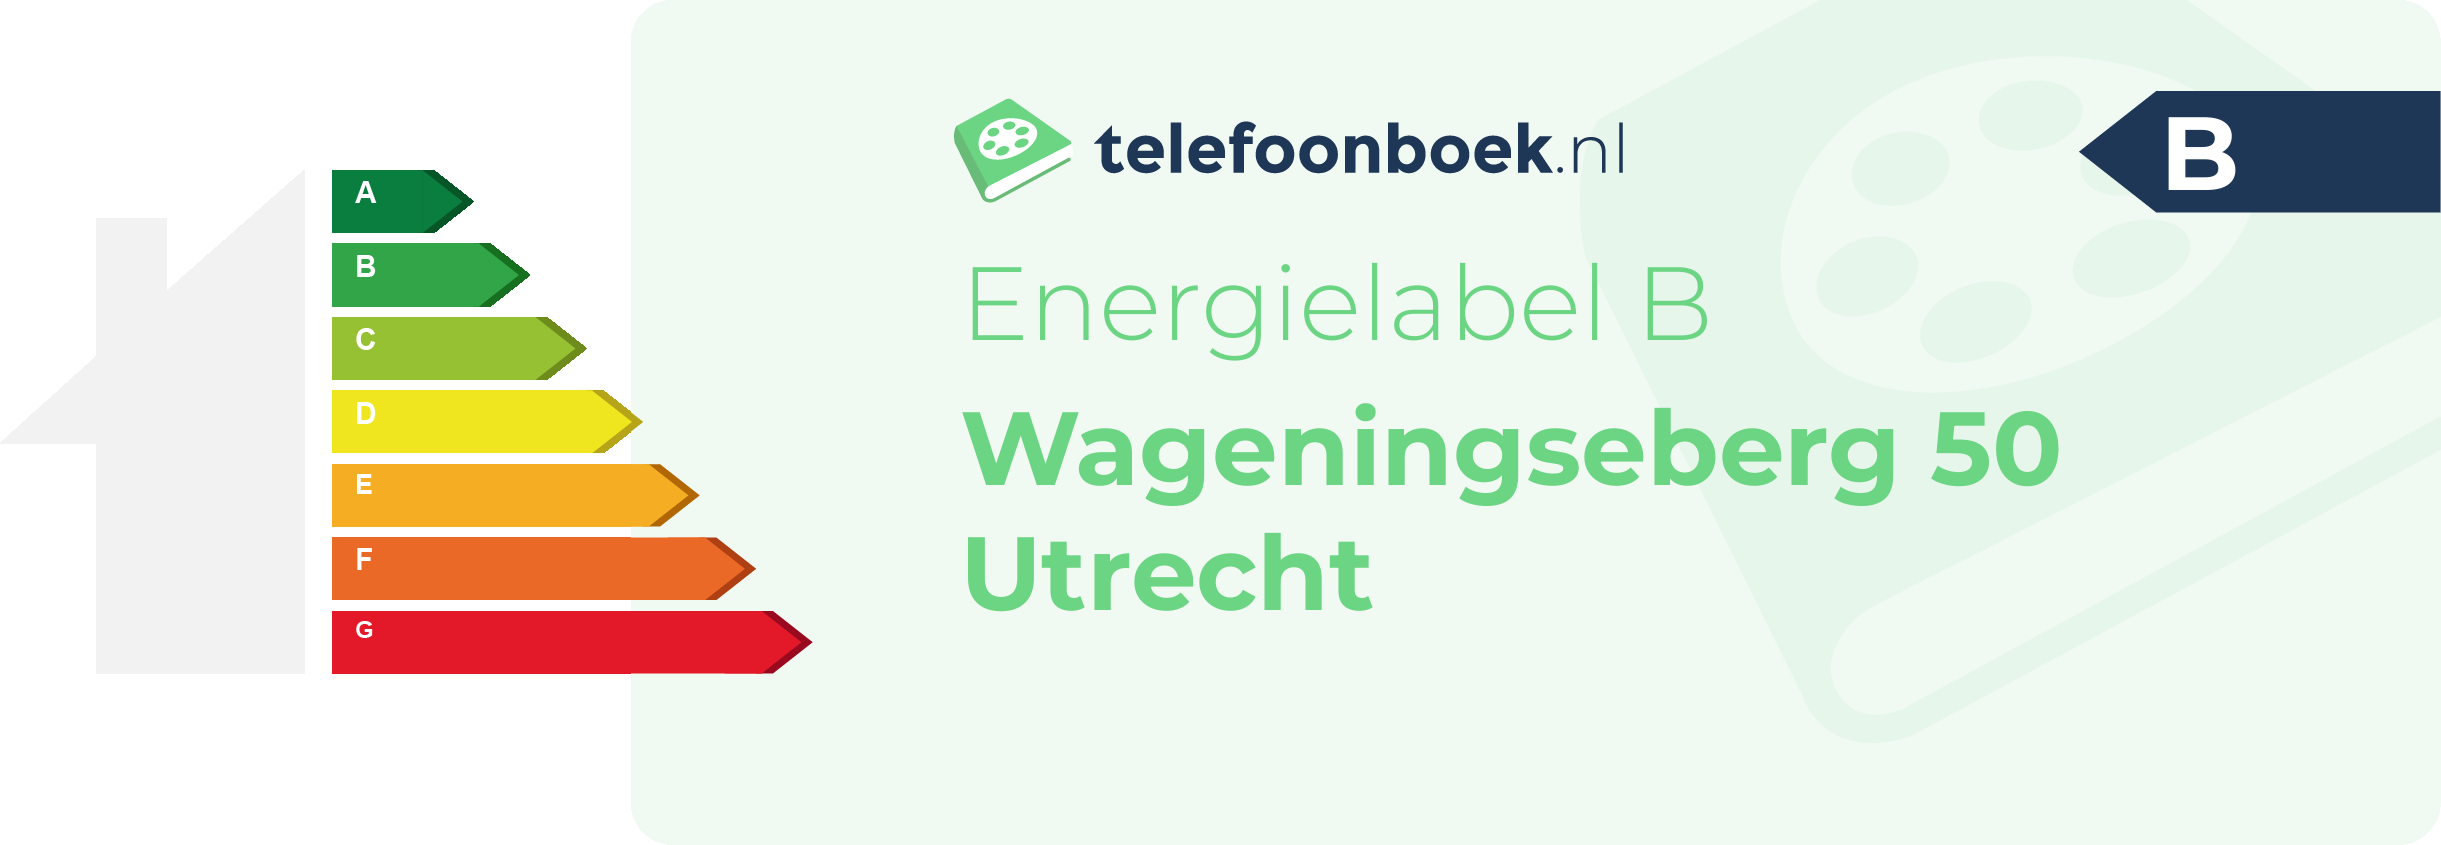 Energielabel Wageningseberg 50 Utrecht